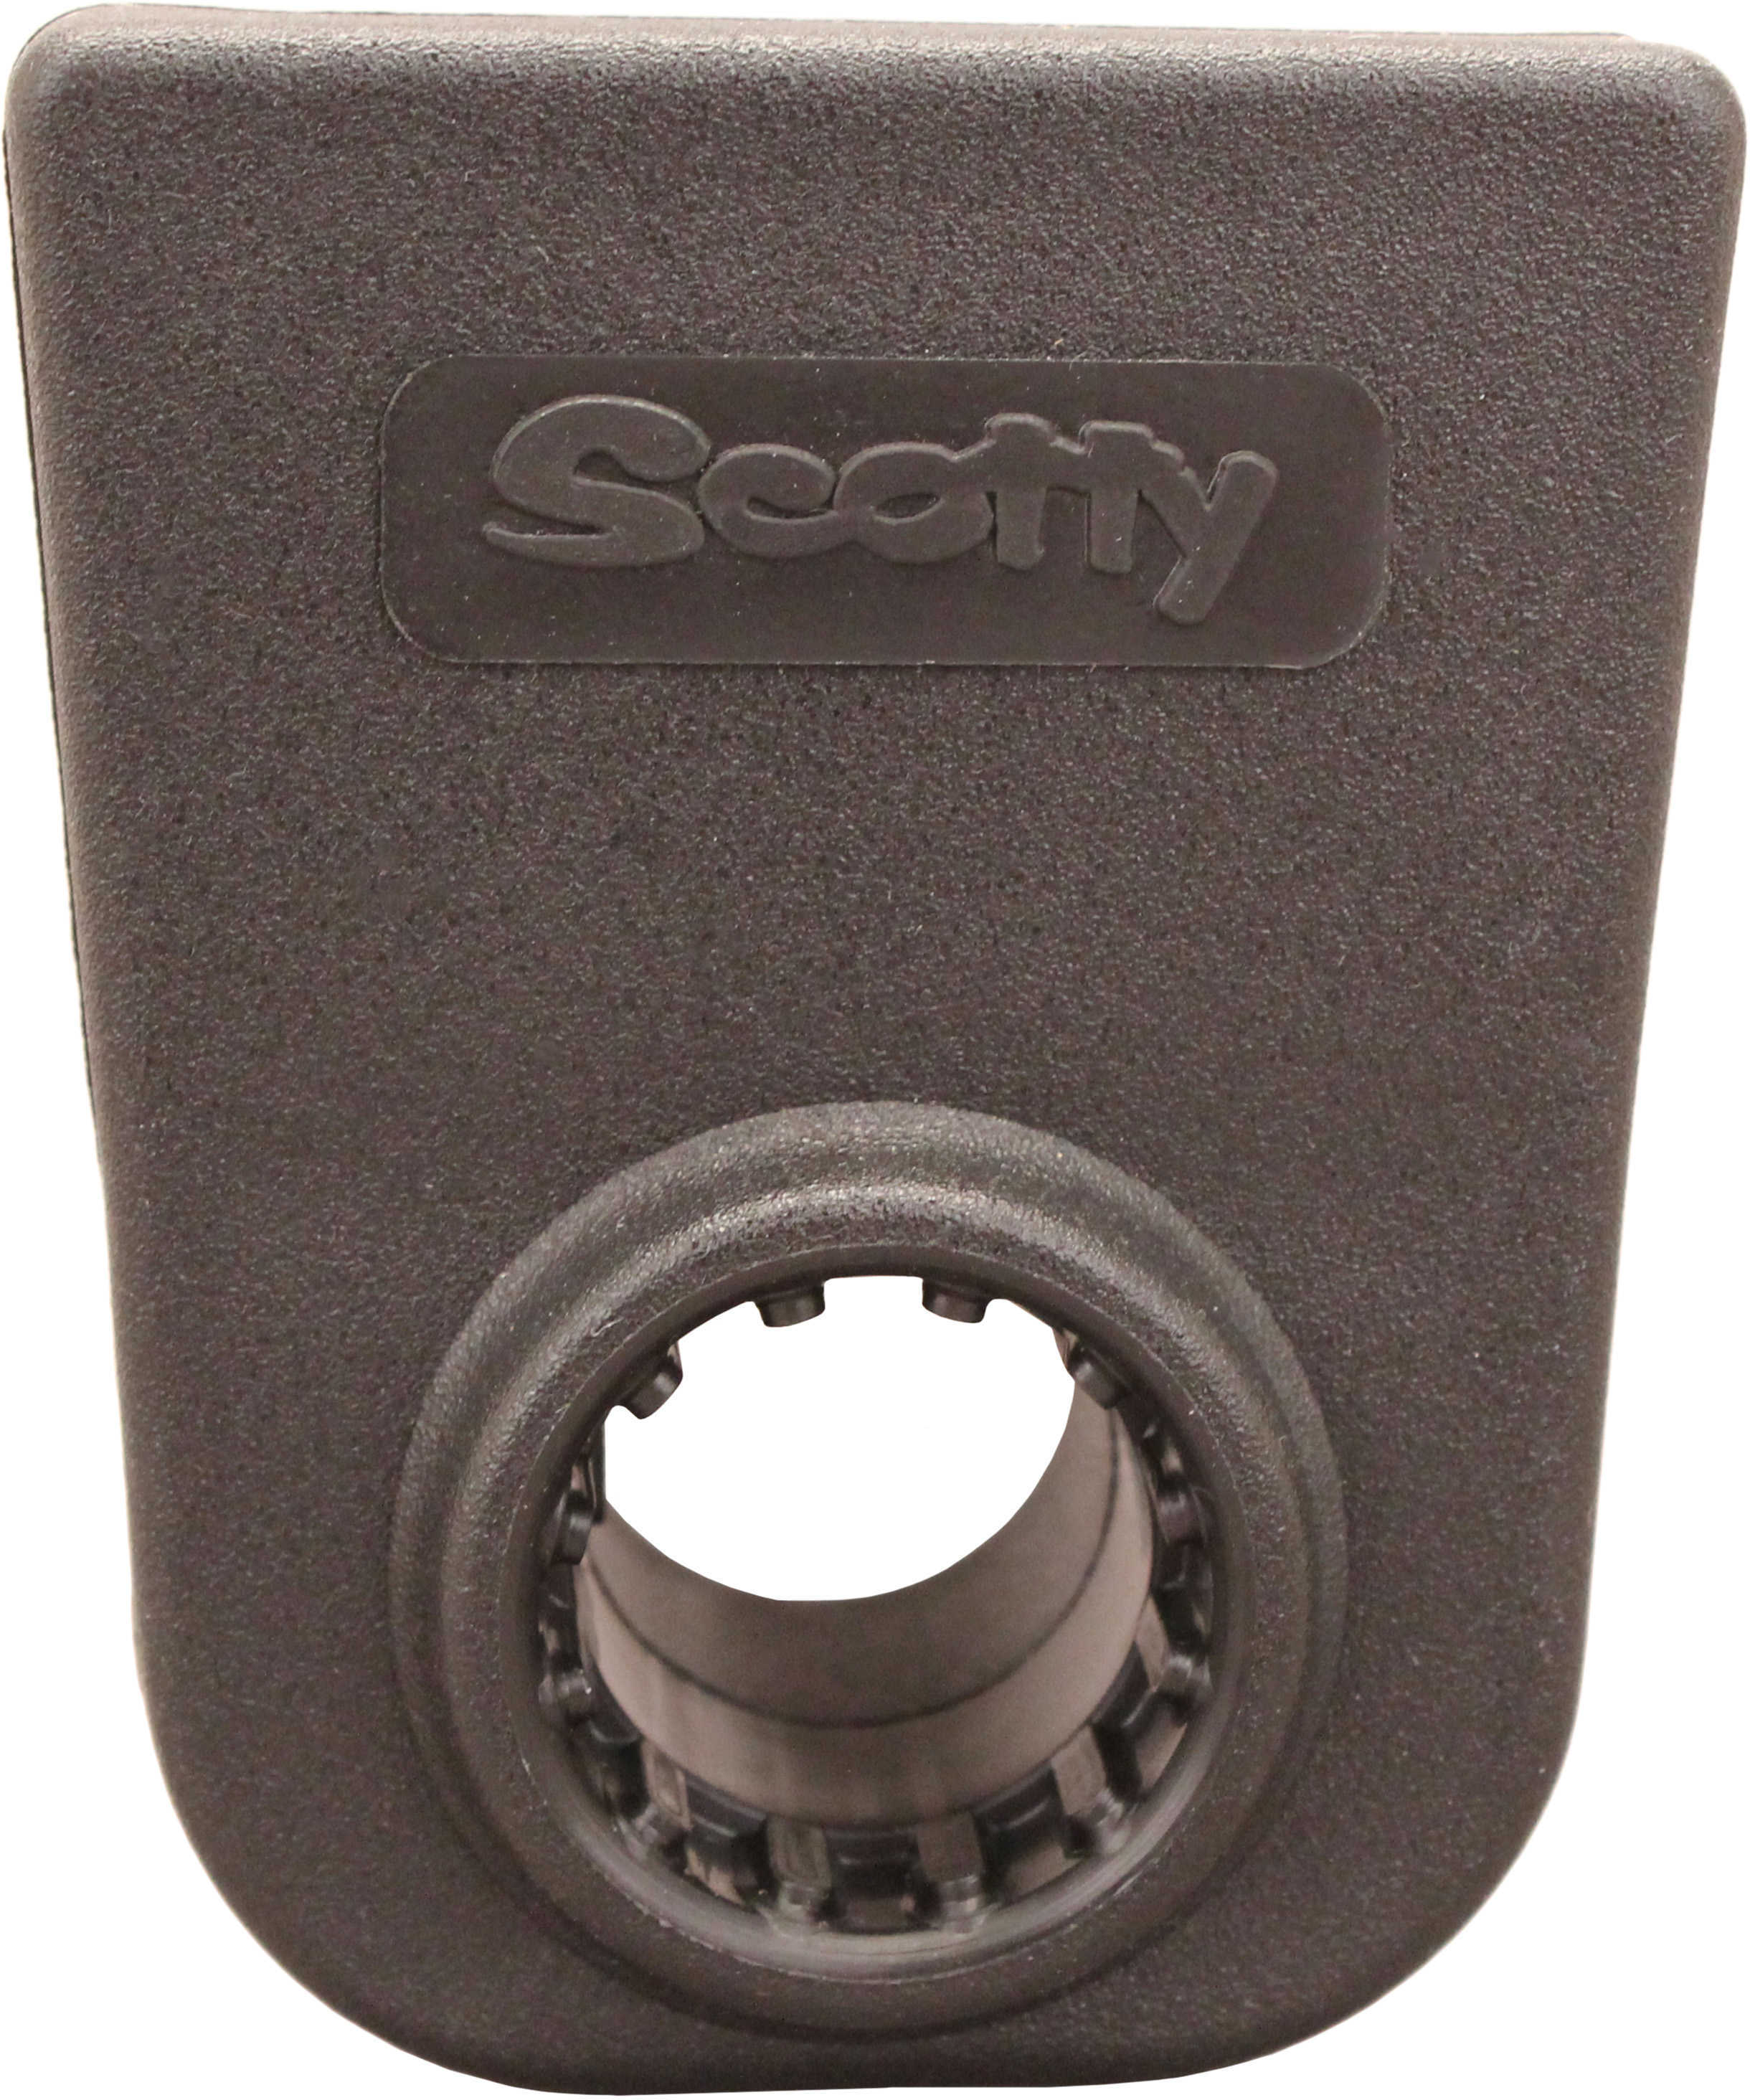 Scotty Rail Mounting Adapter Black 7/8" Round